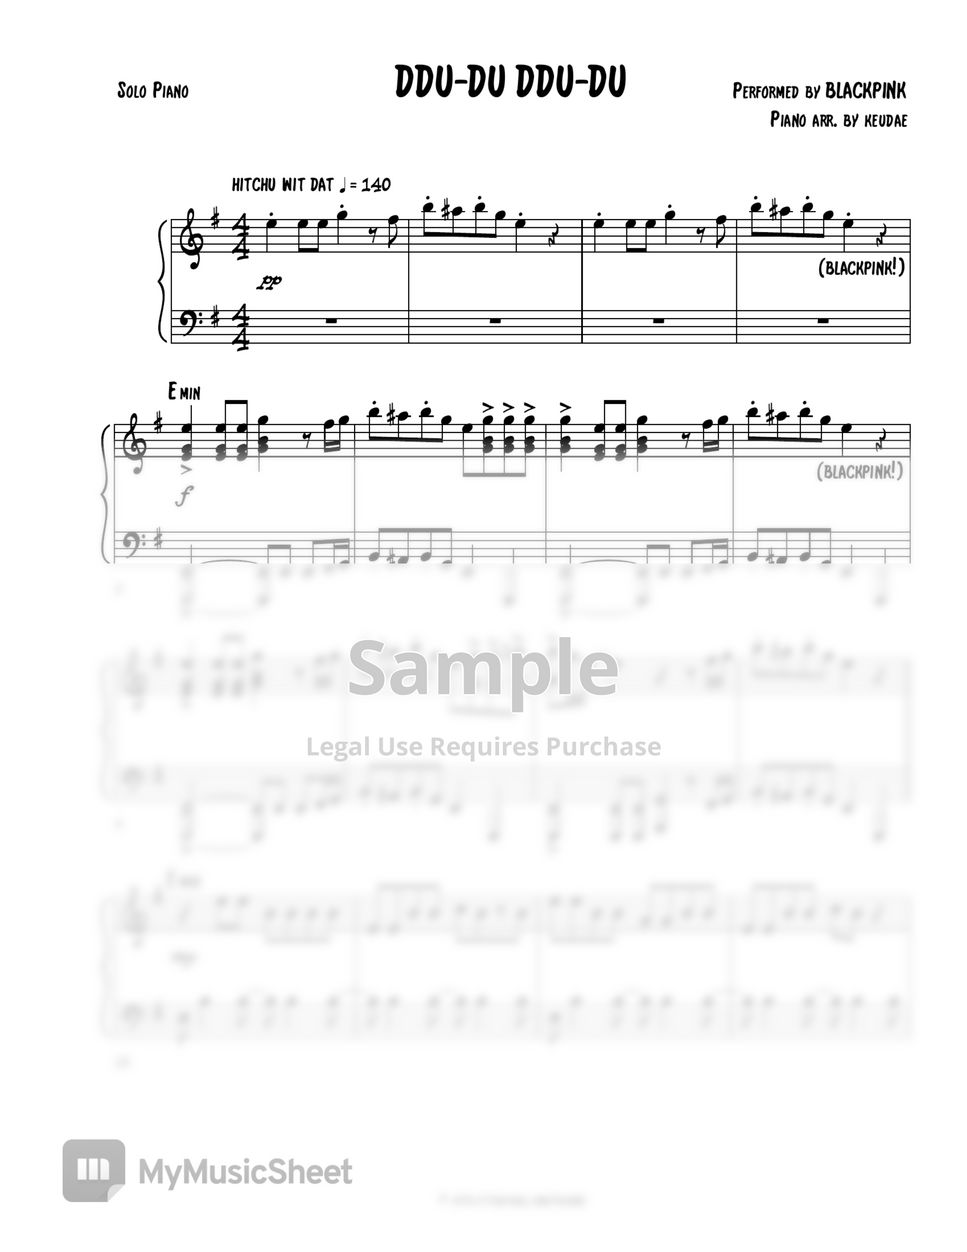 BLACKPINK - DDU-DU DDU-DU (solo piano arrangement)